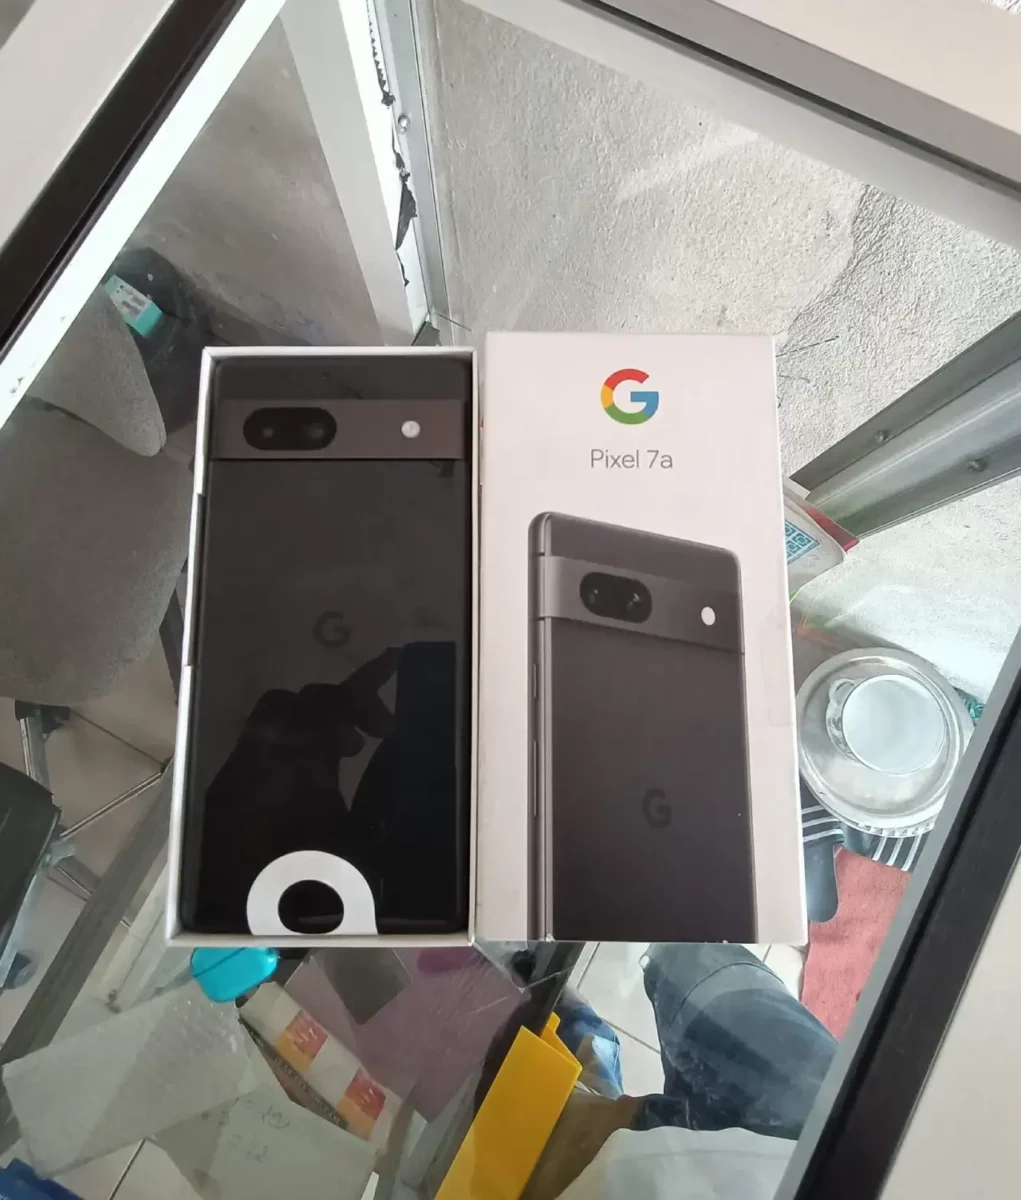 Google Pixel 7a Unboxing